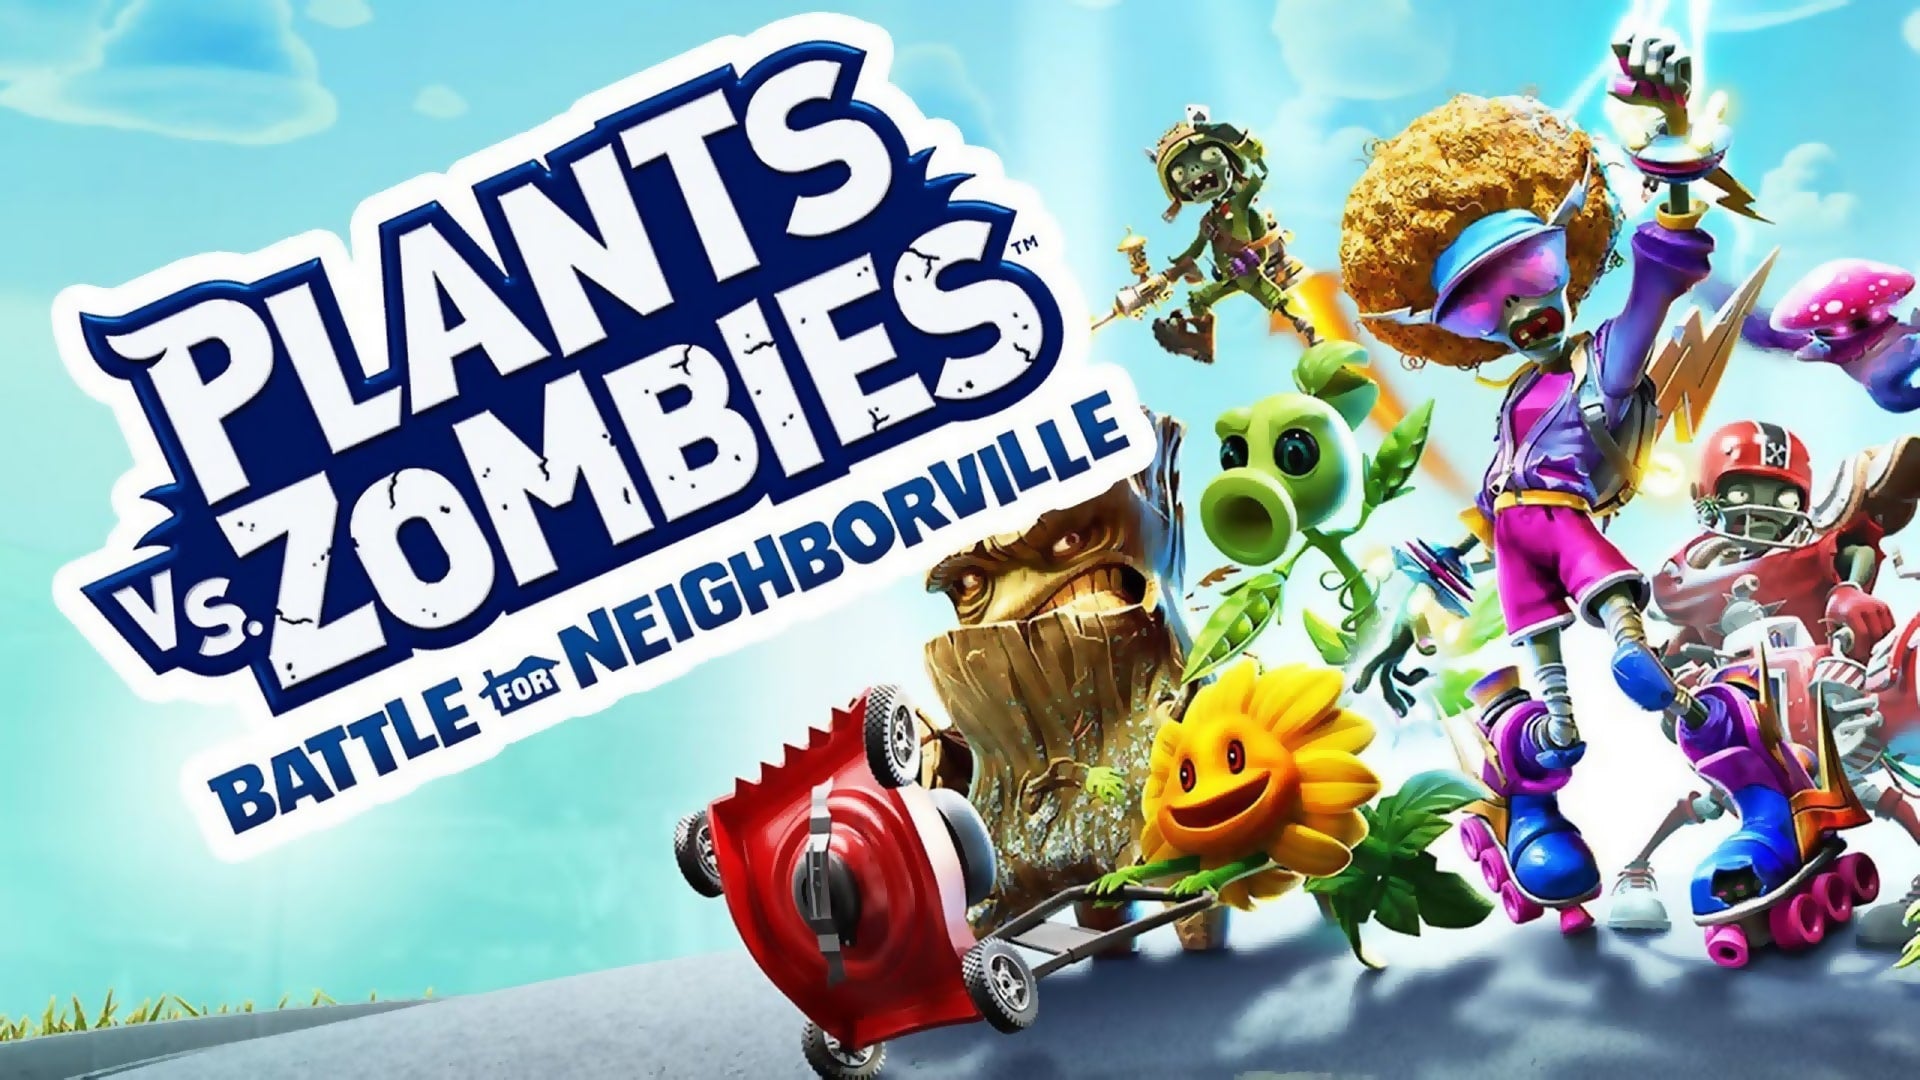 Plants vs. Zombies: Battle for Neighborville - Metacritic